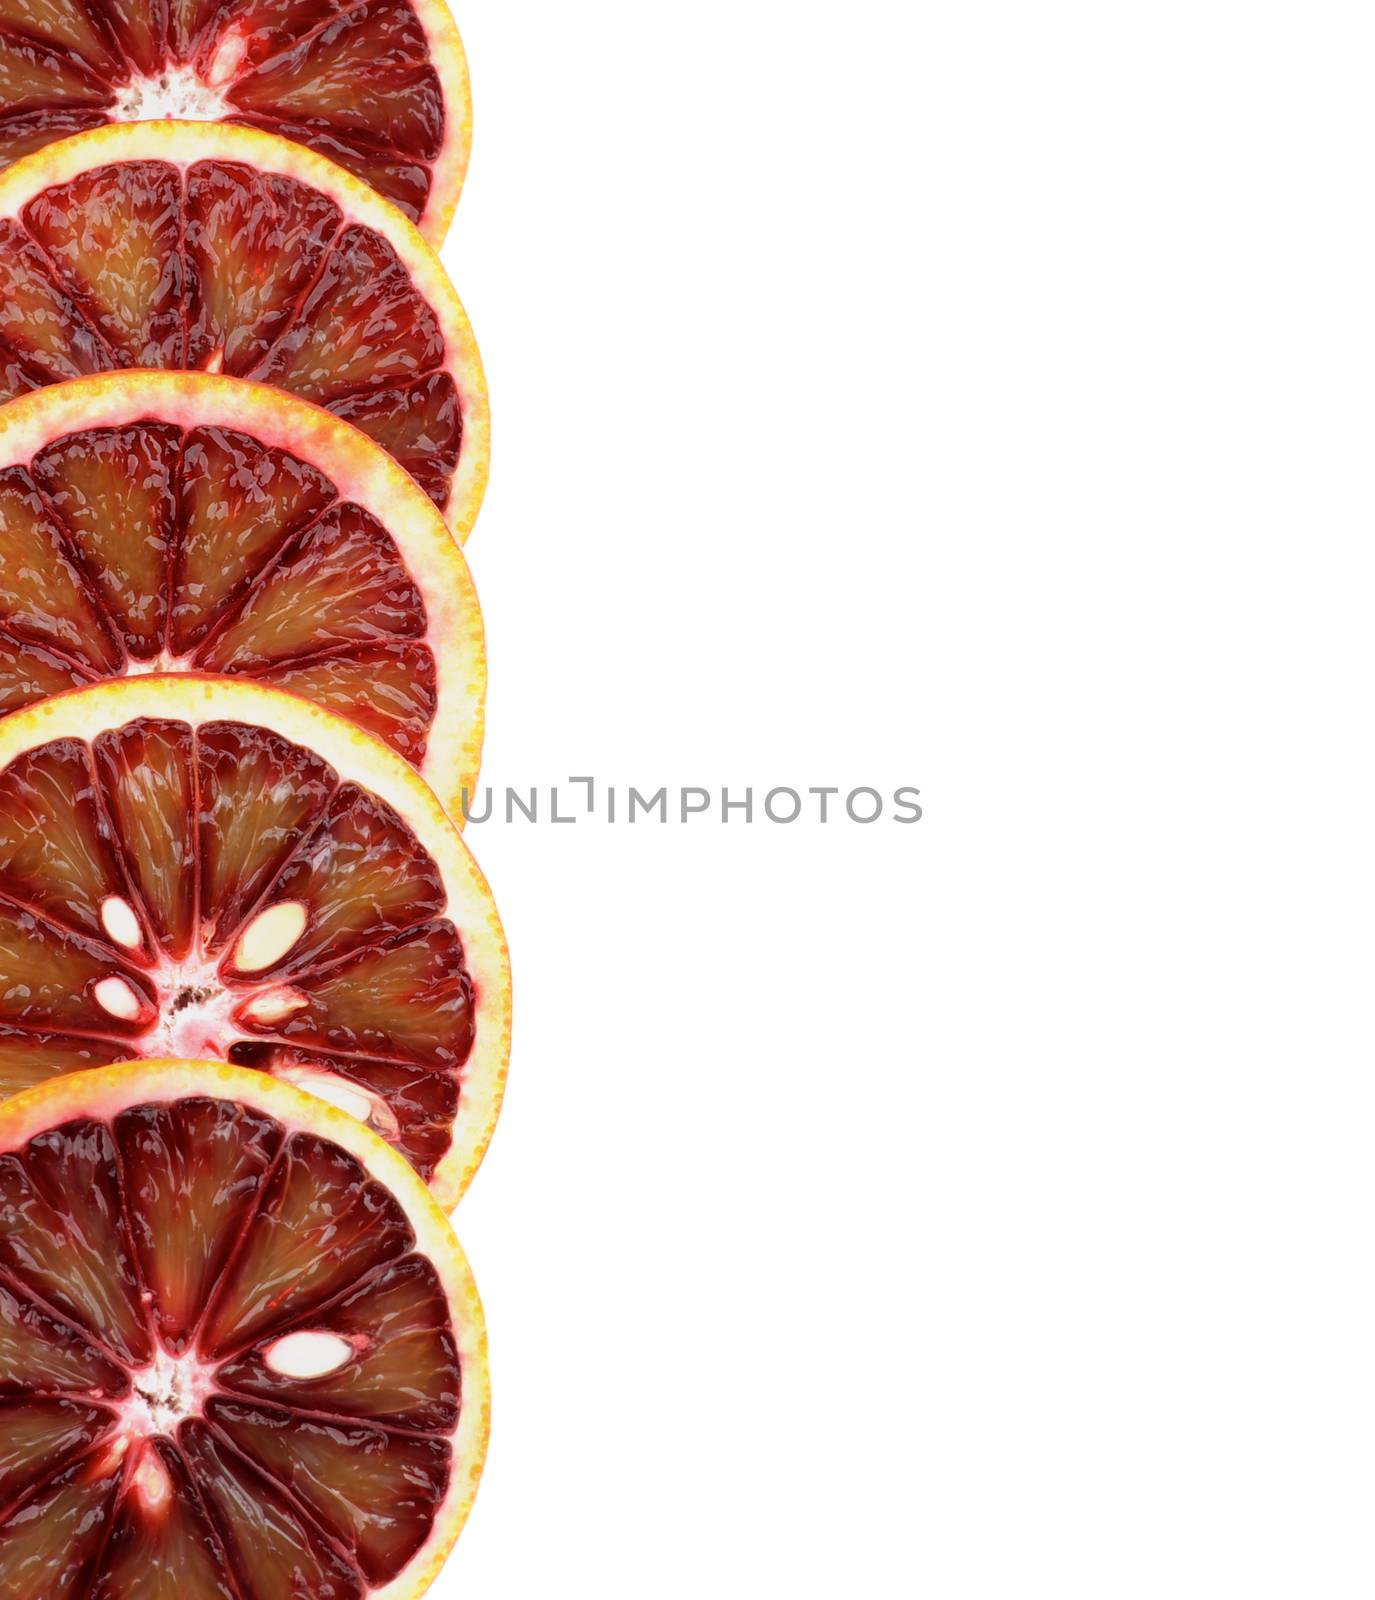 Frame of Blood Oranges by zhekos